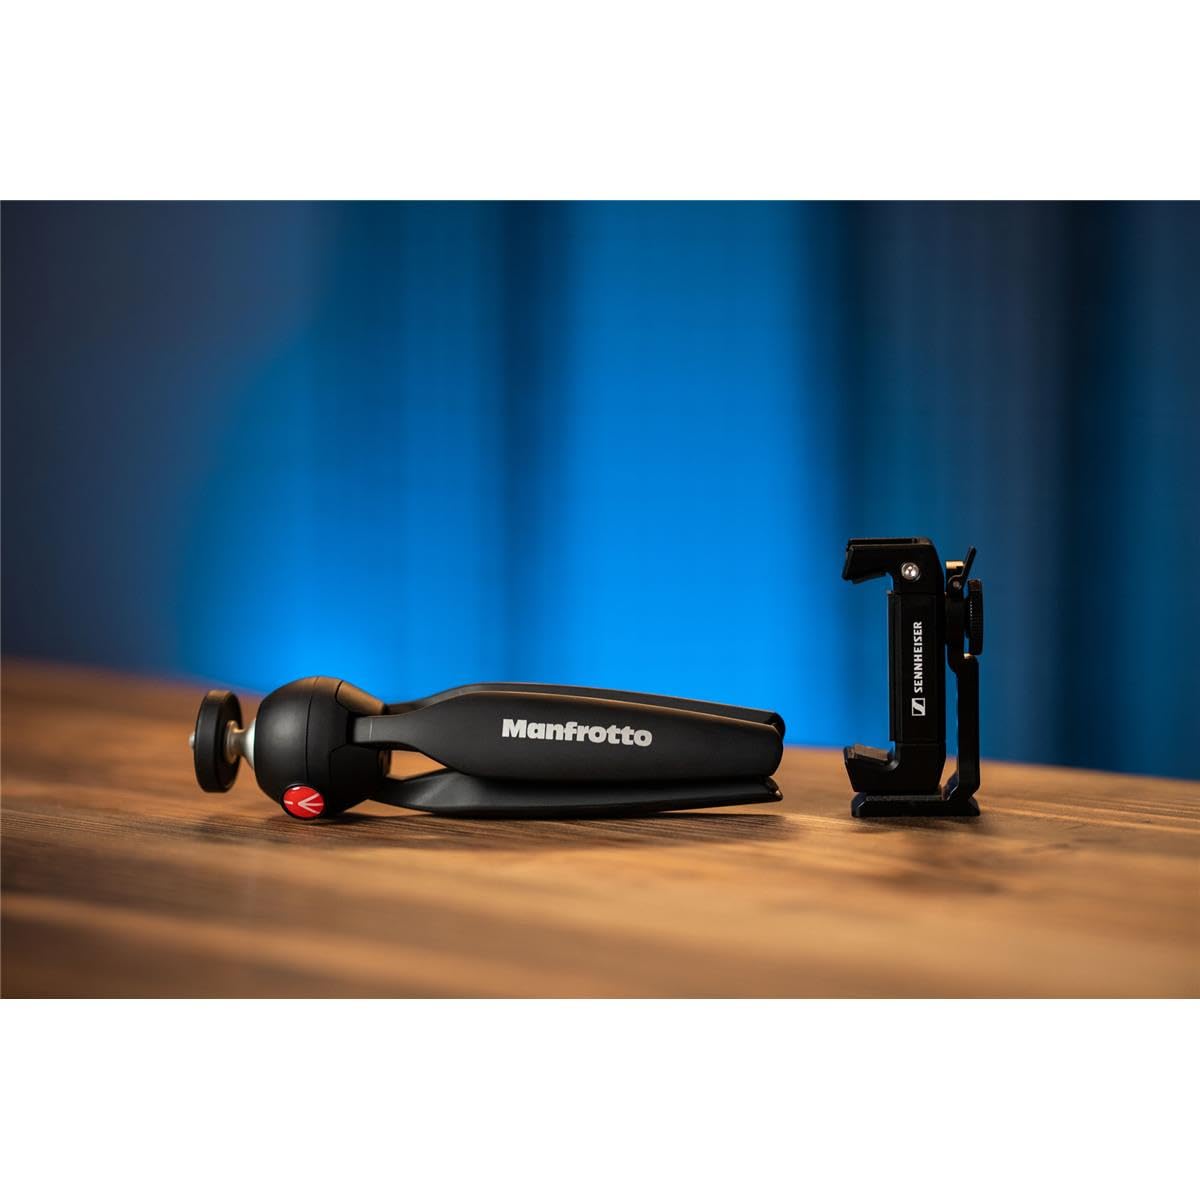 Sennheiser Pro Audio Sennheiser Professional MKE 200 + Mobile Kit, Directional On-Camera Microphone with Smartphone Clamp & Manfrotto PIXI Mini Tripod, 509256, Black